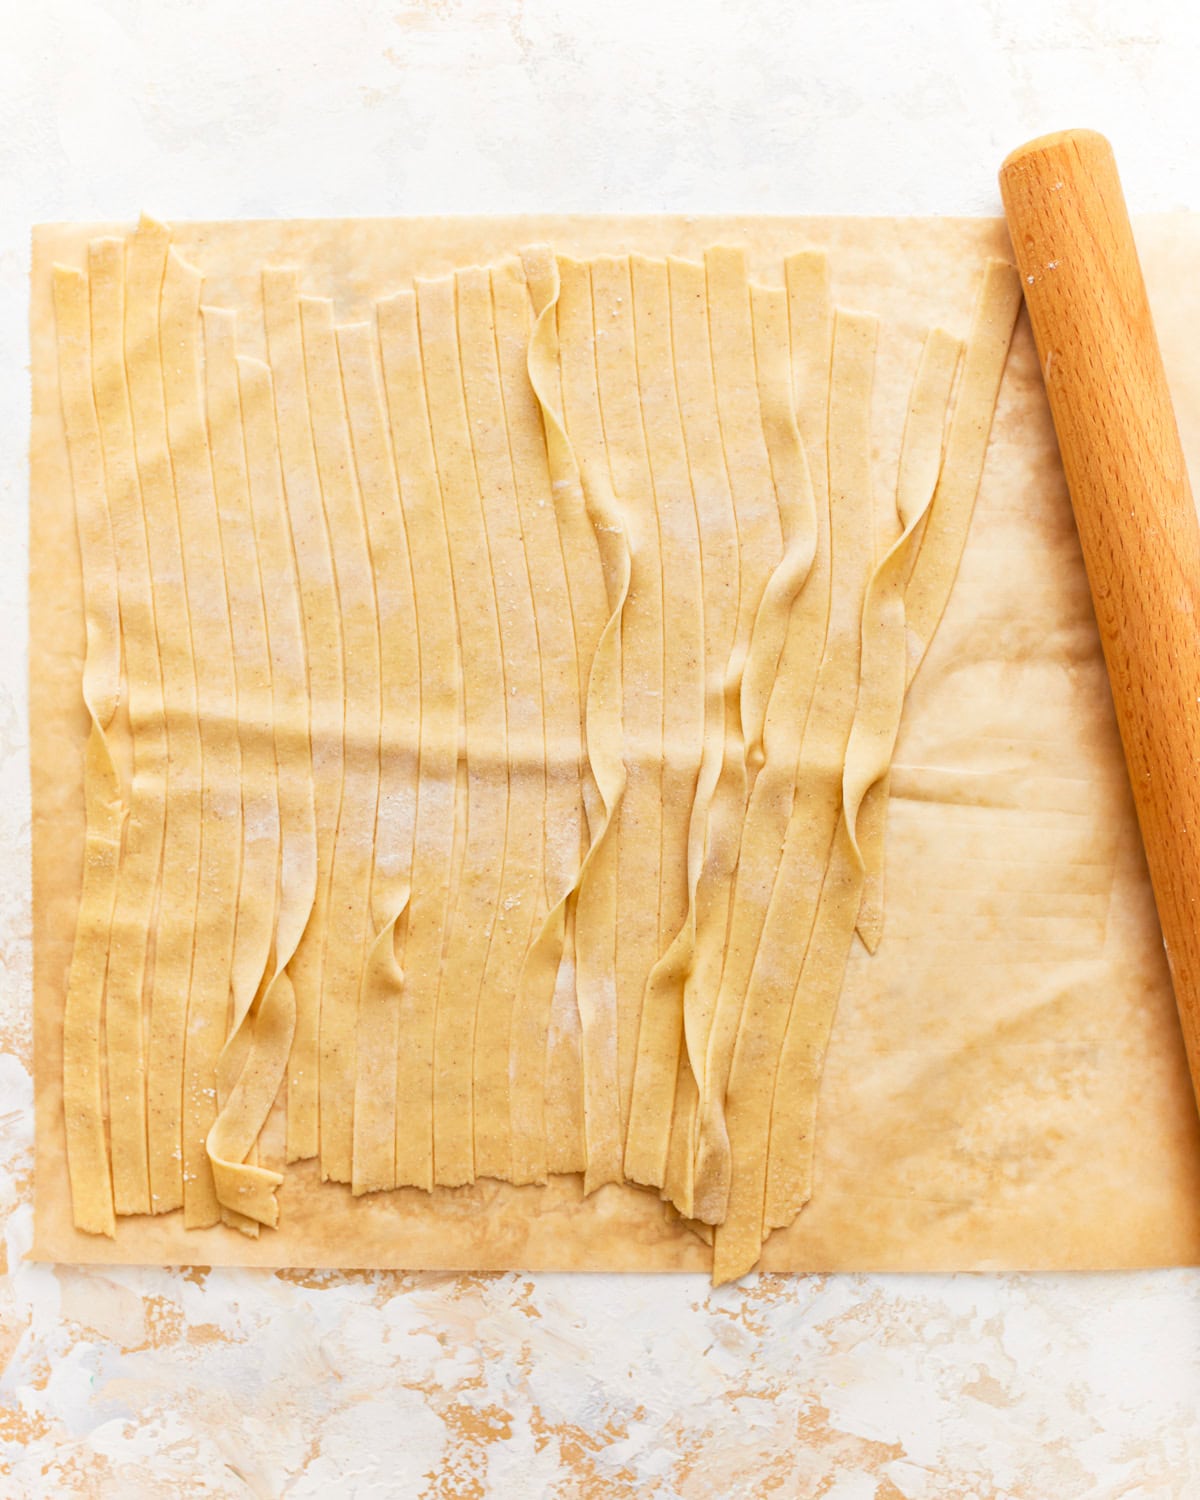 gluten-free pasta dough cut into strips.